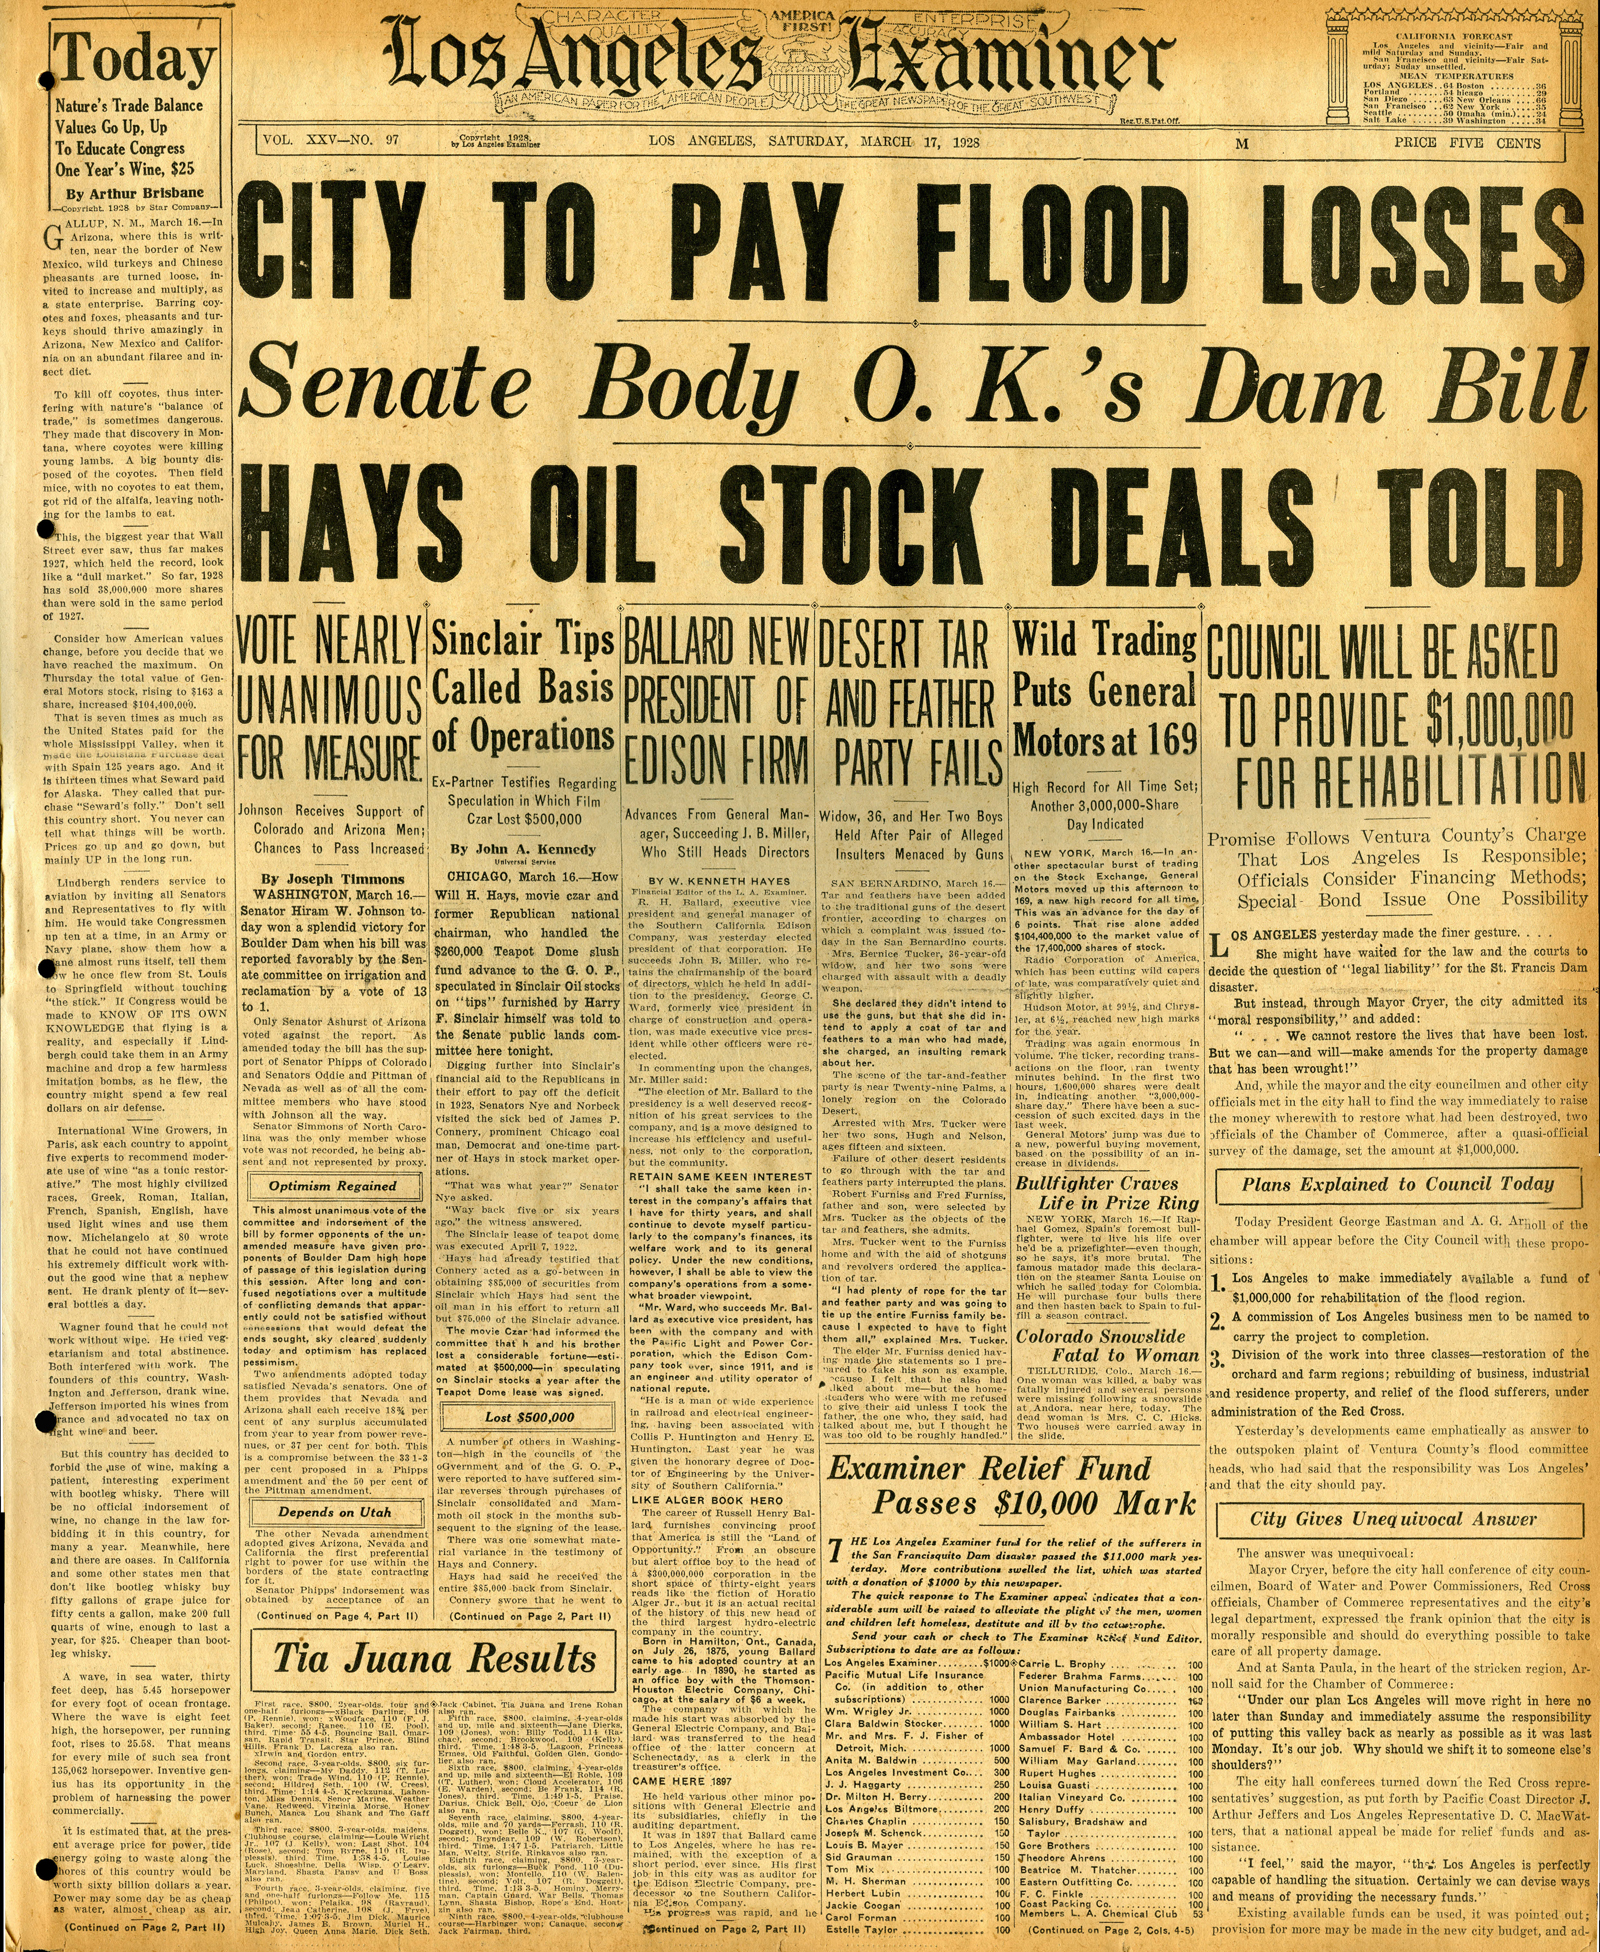 St. Francis Dam Disaster

LOS ANGELES EXAMINER

Los Angeles, California | Saturday, March 17, 1928